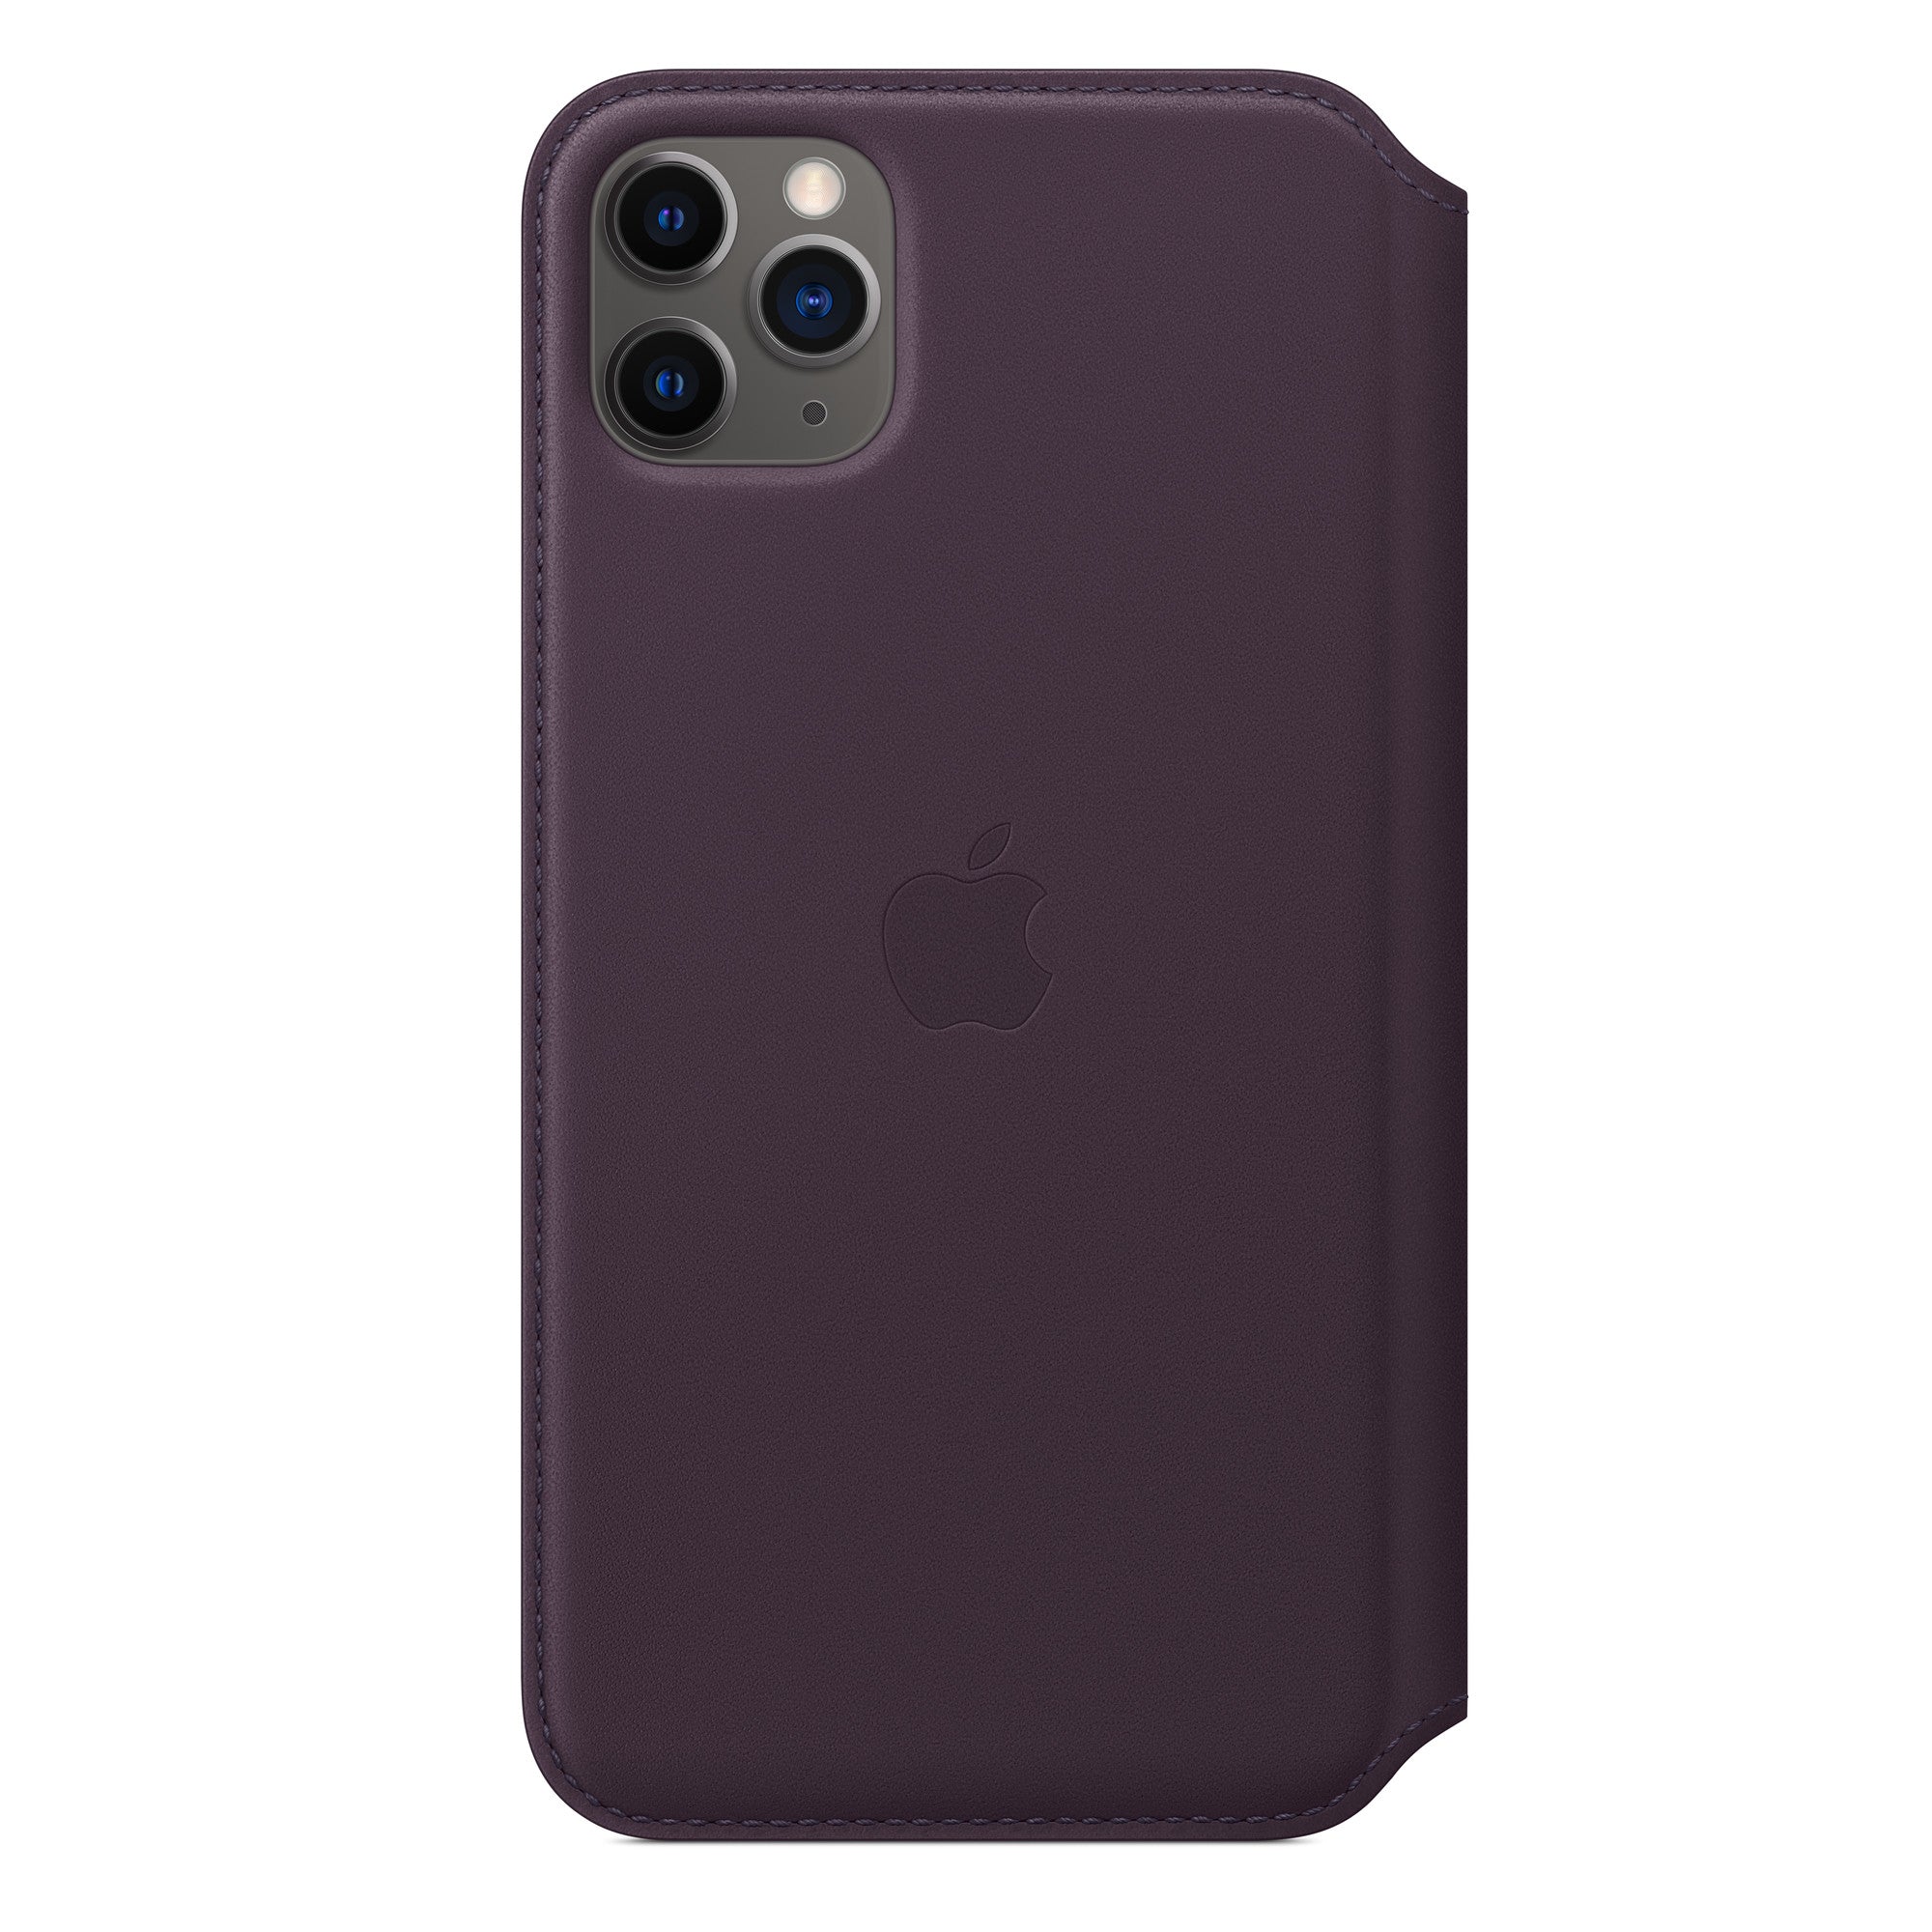 Apple iPhone 11 Pro Leather Folio - Aubergine - Brand New